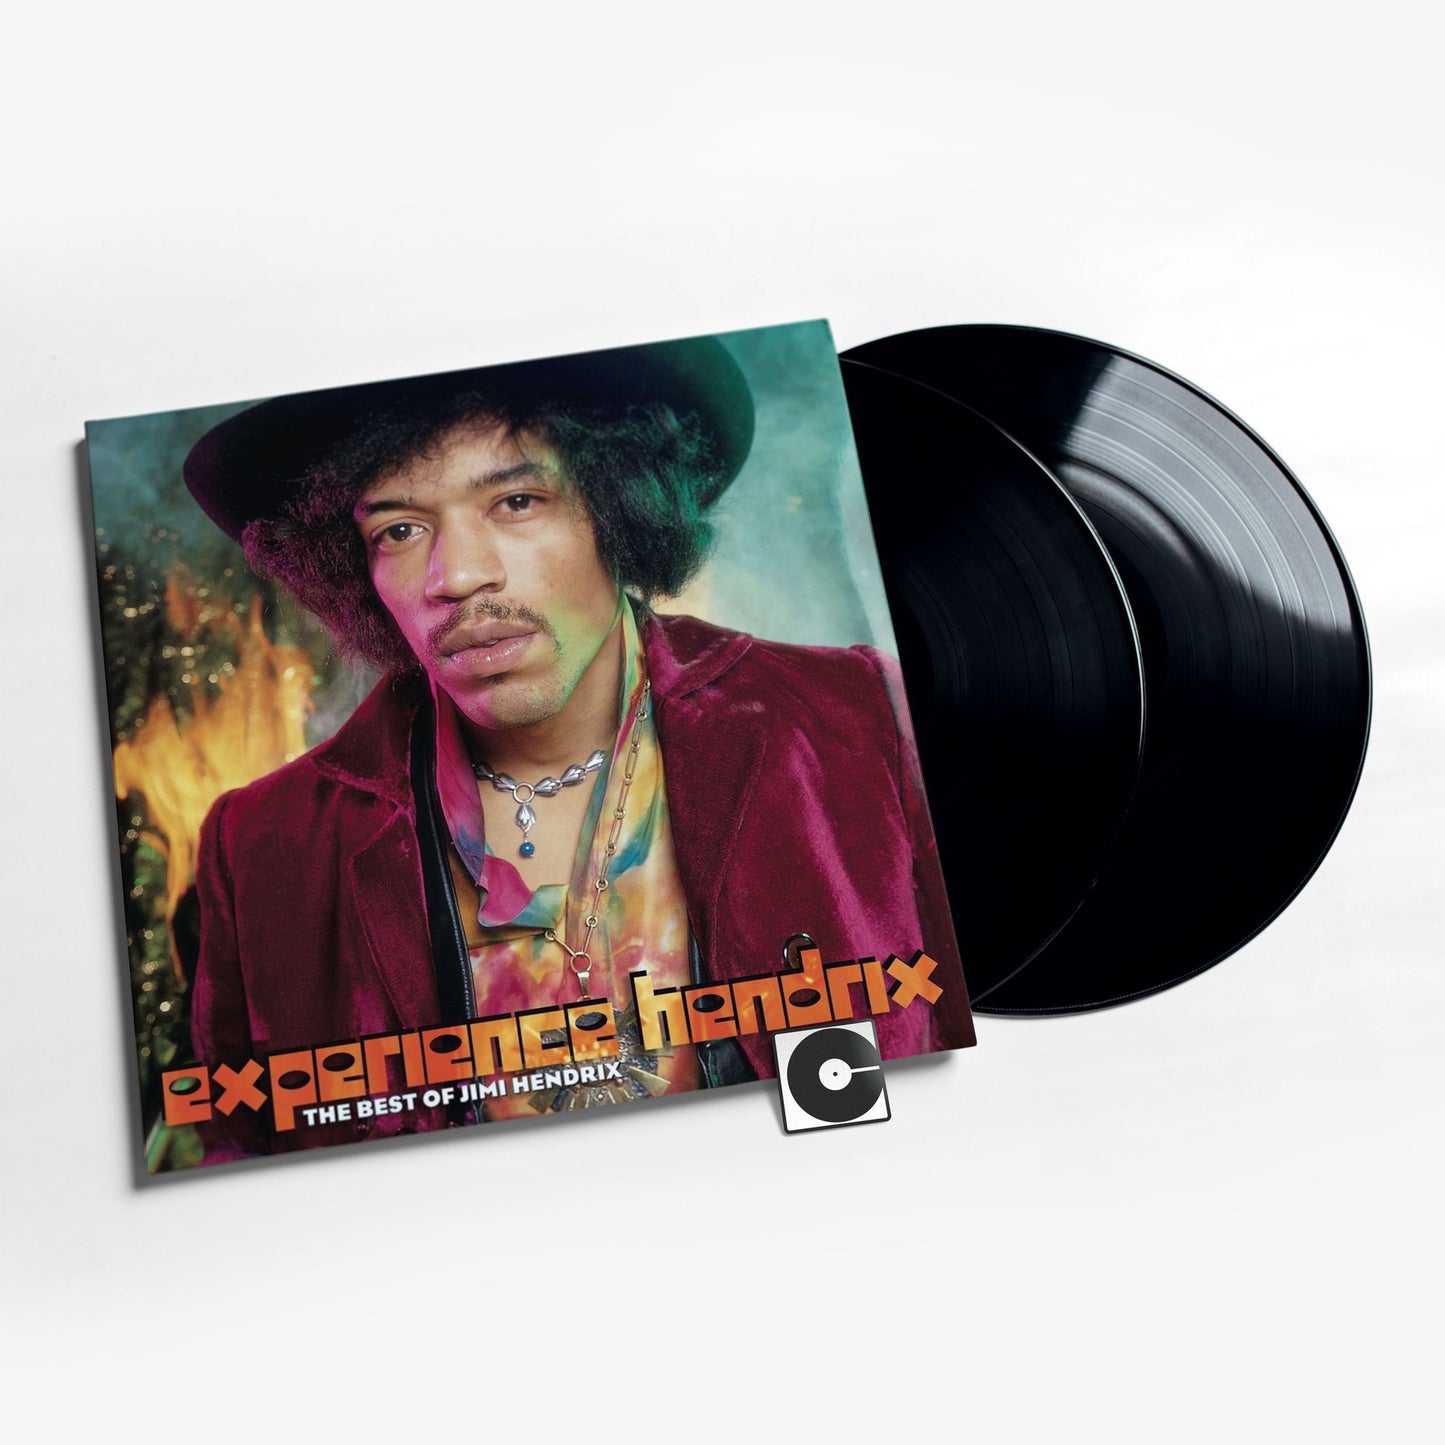 Jimi Hendrix - "The Best Of Jimi Hendrix"